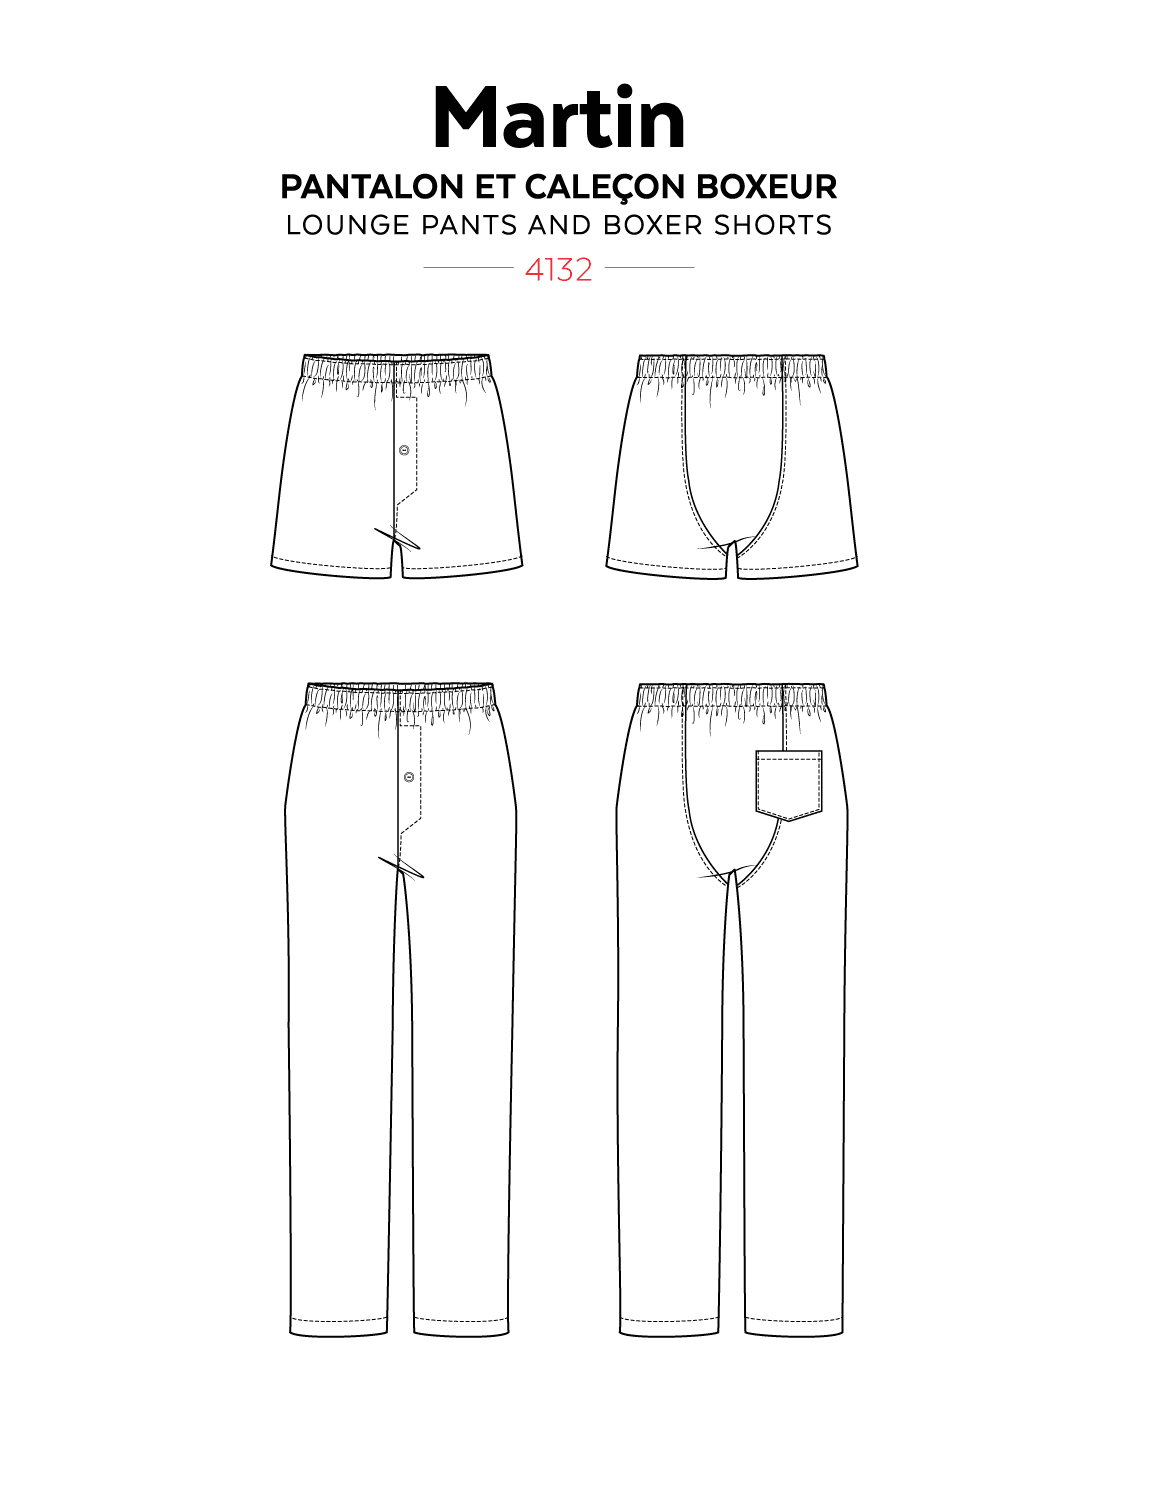 Pants and boxer briefs MARTIN 4132 | Paper pattern - Jalie